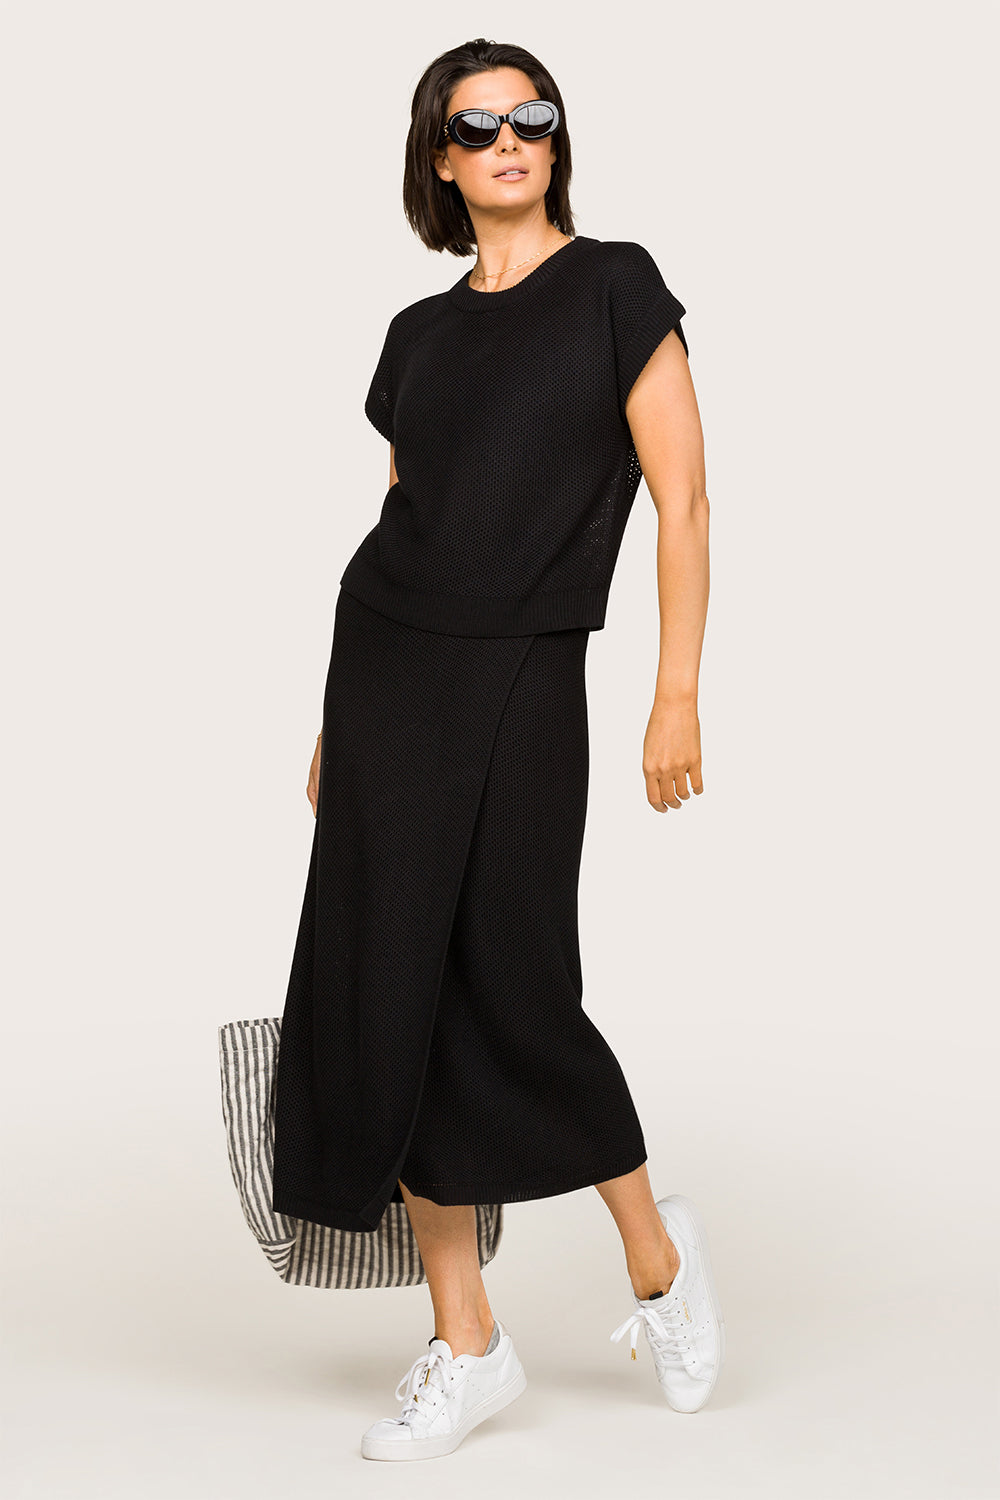 Alala women's knit mesh maxi skirt in black